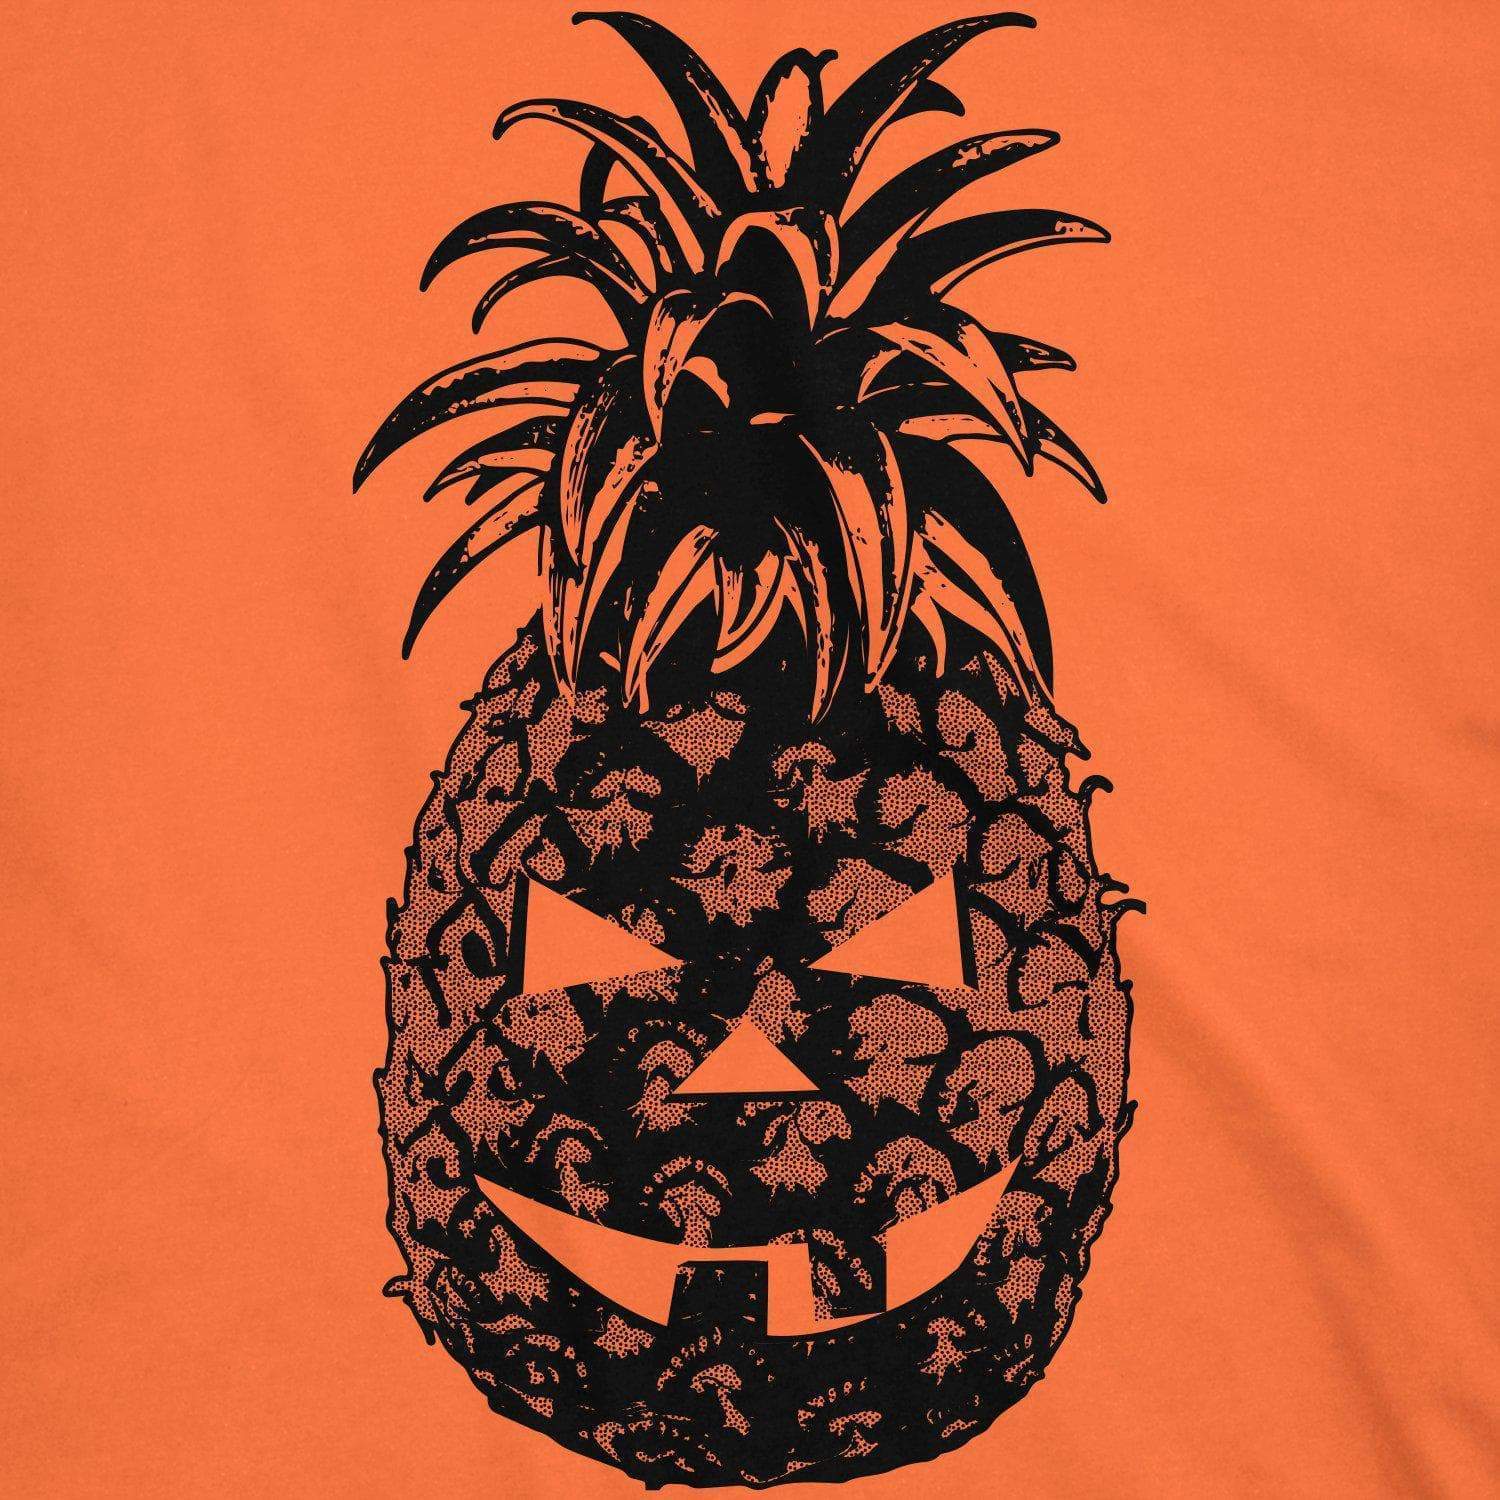 Pineapple Jack-O-Lantern Men's Tshirt - Crazy Dog T-Shirts